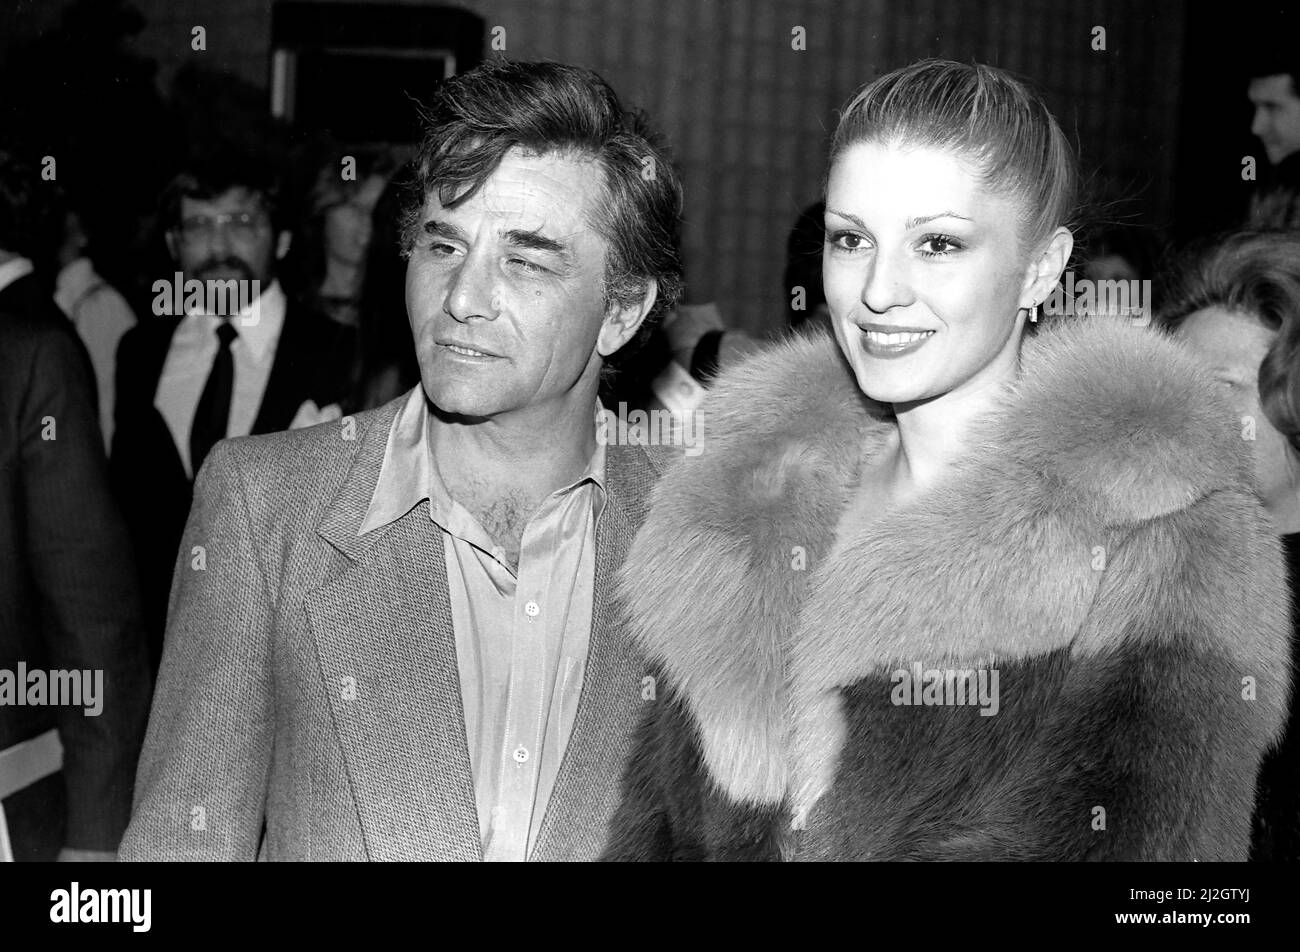 Peter Falk und Frau Shera Danese bei der Premiere des Films Kramer vs. Kramer in Hollywood, 1979 Stockfoto